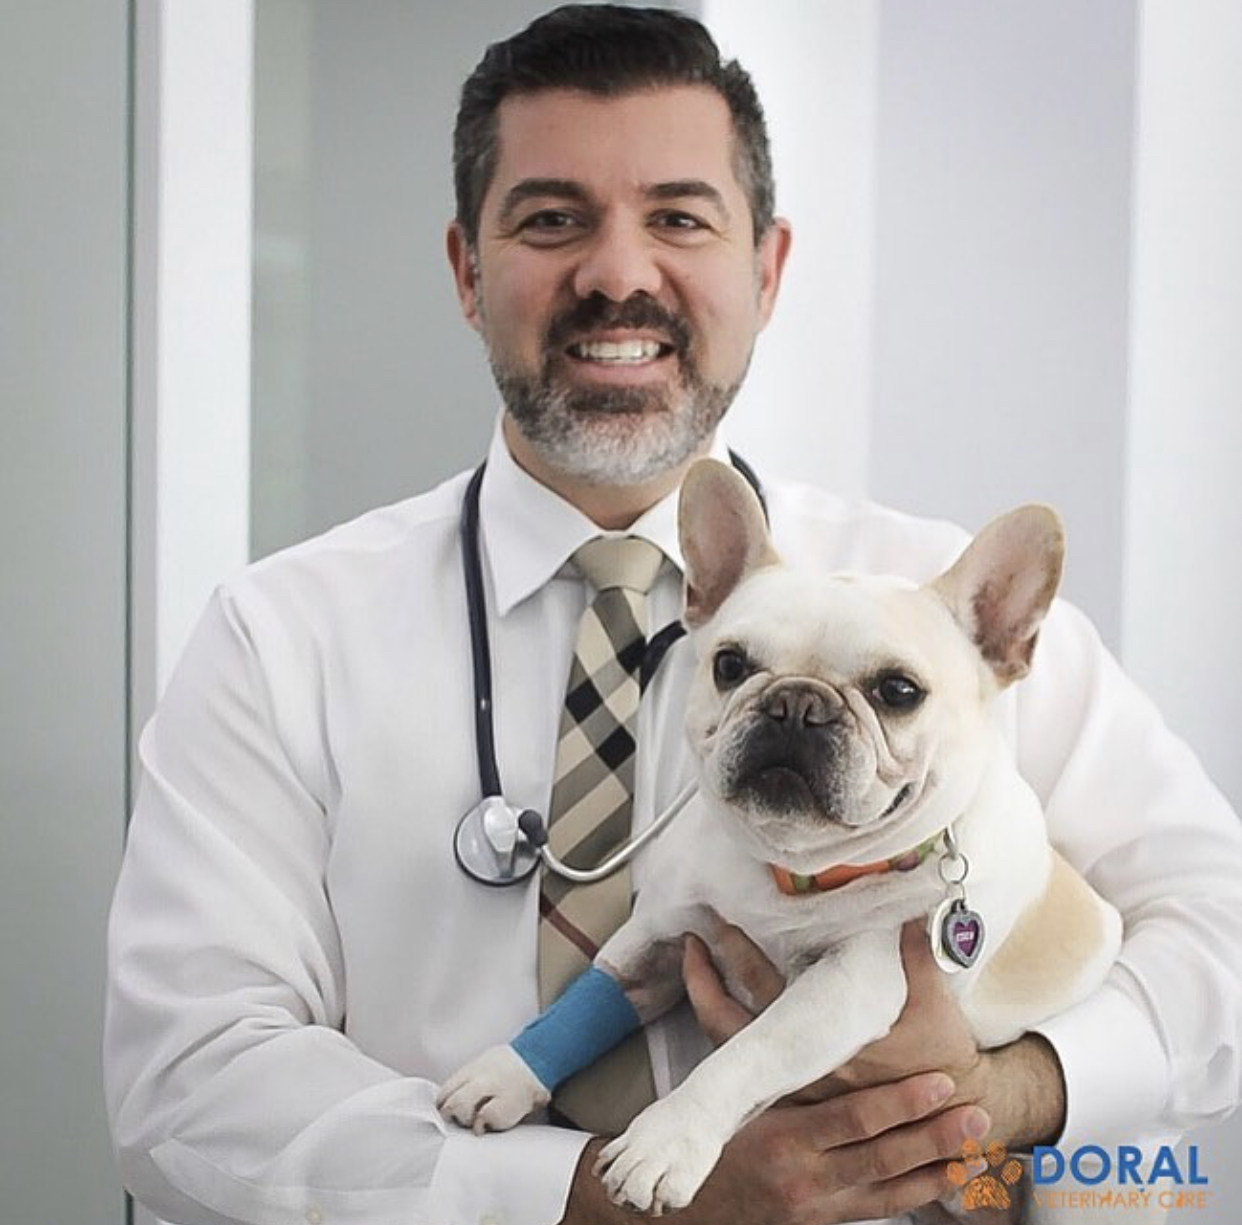 Doral Veterinary Care